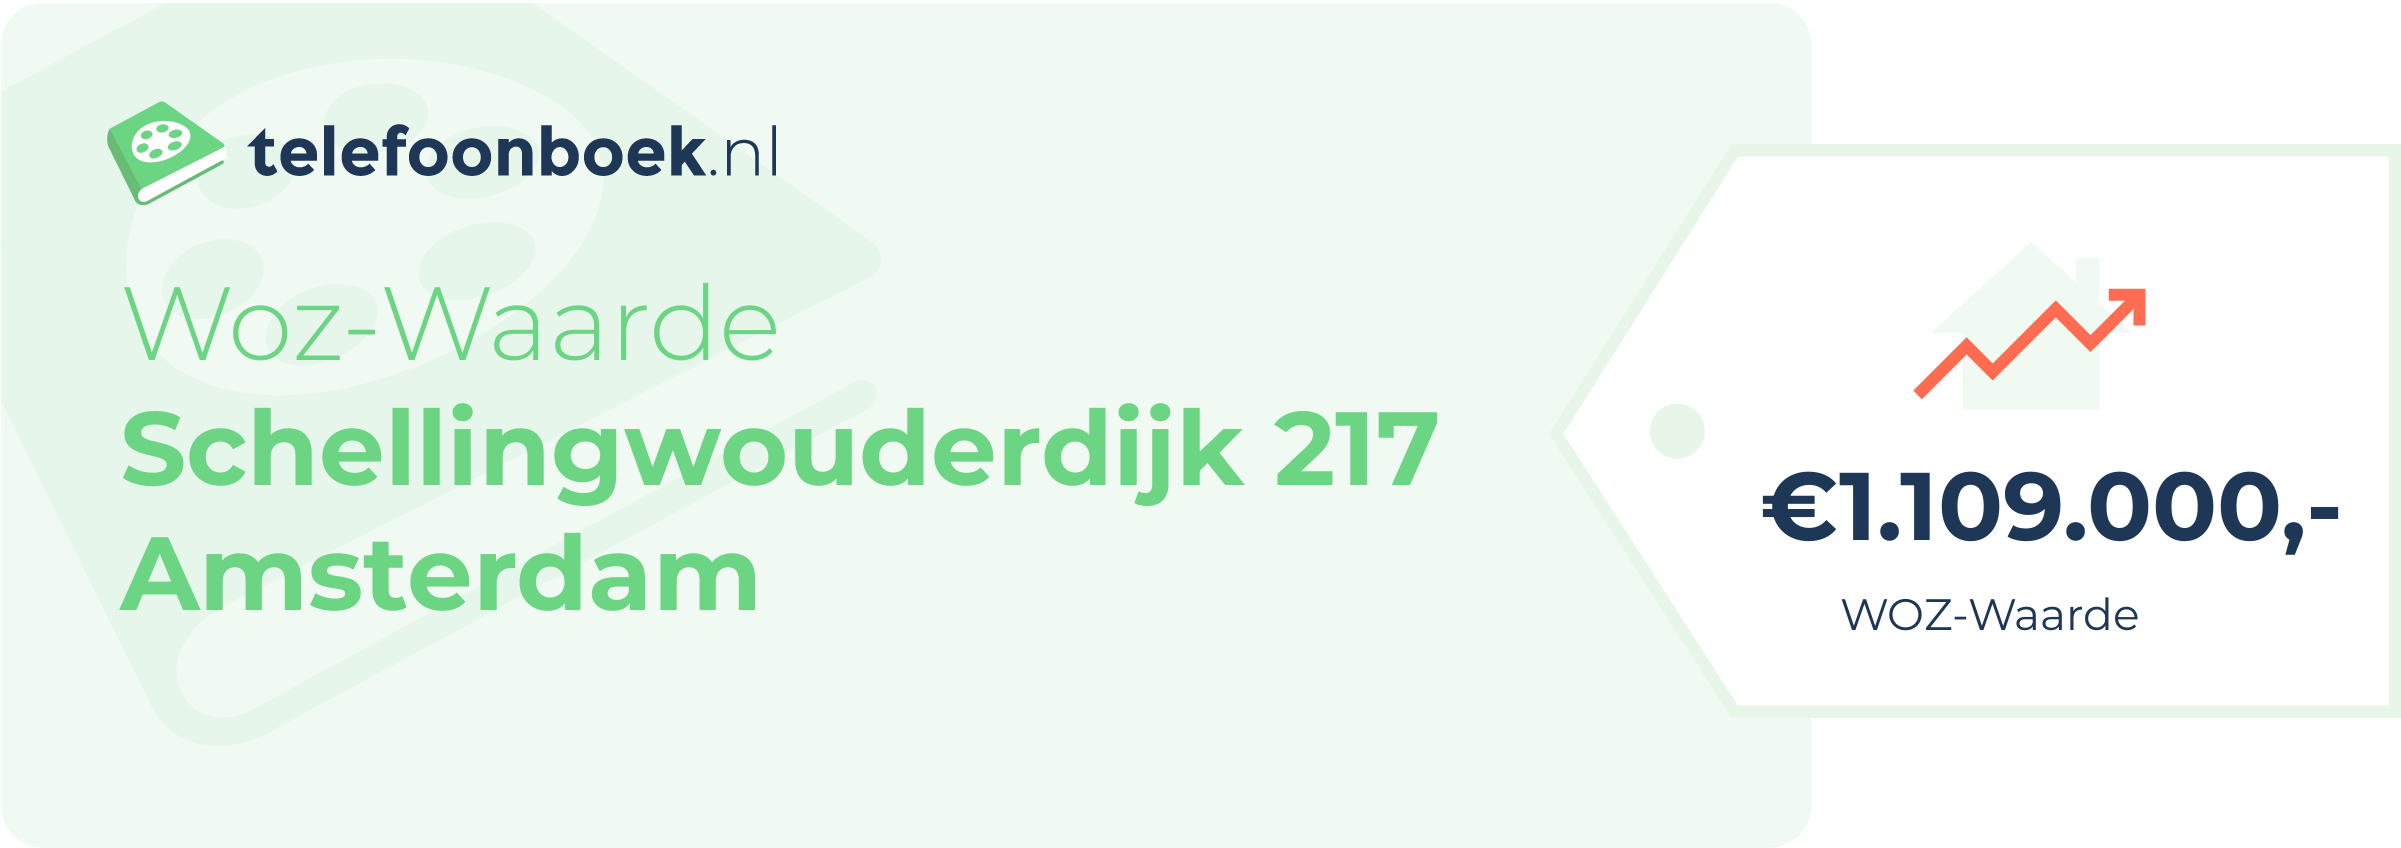 WOZ-waarde Schellingwouderdijk 217 Amsterdam